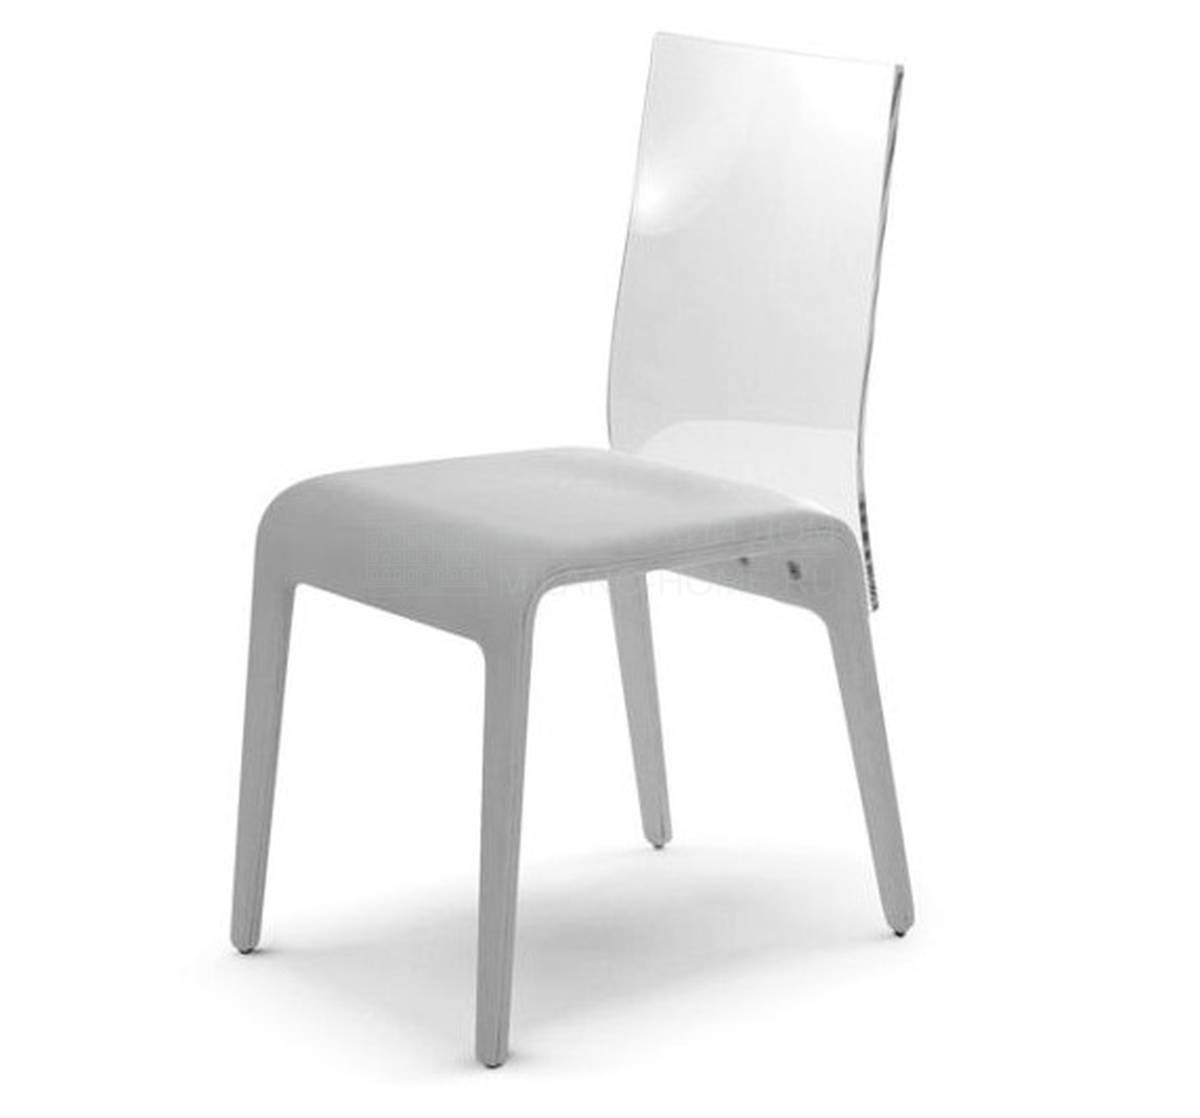 Стул Altuglass chair из Франции фабрики ROCHE BOBOIS